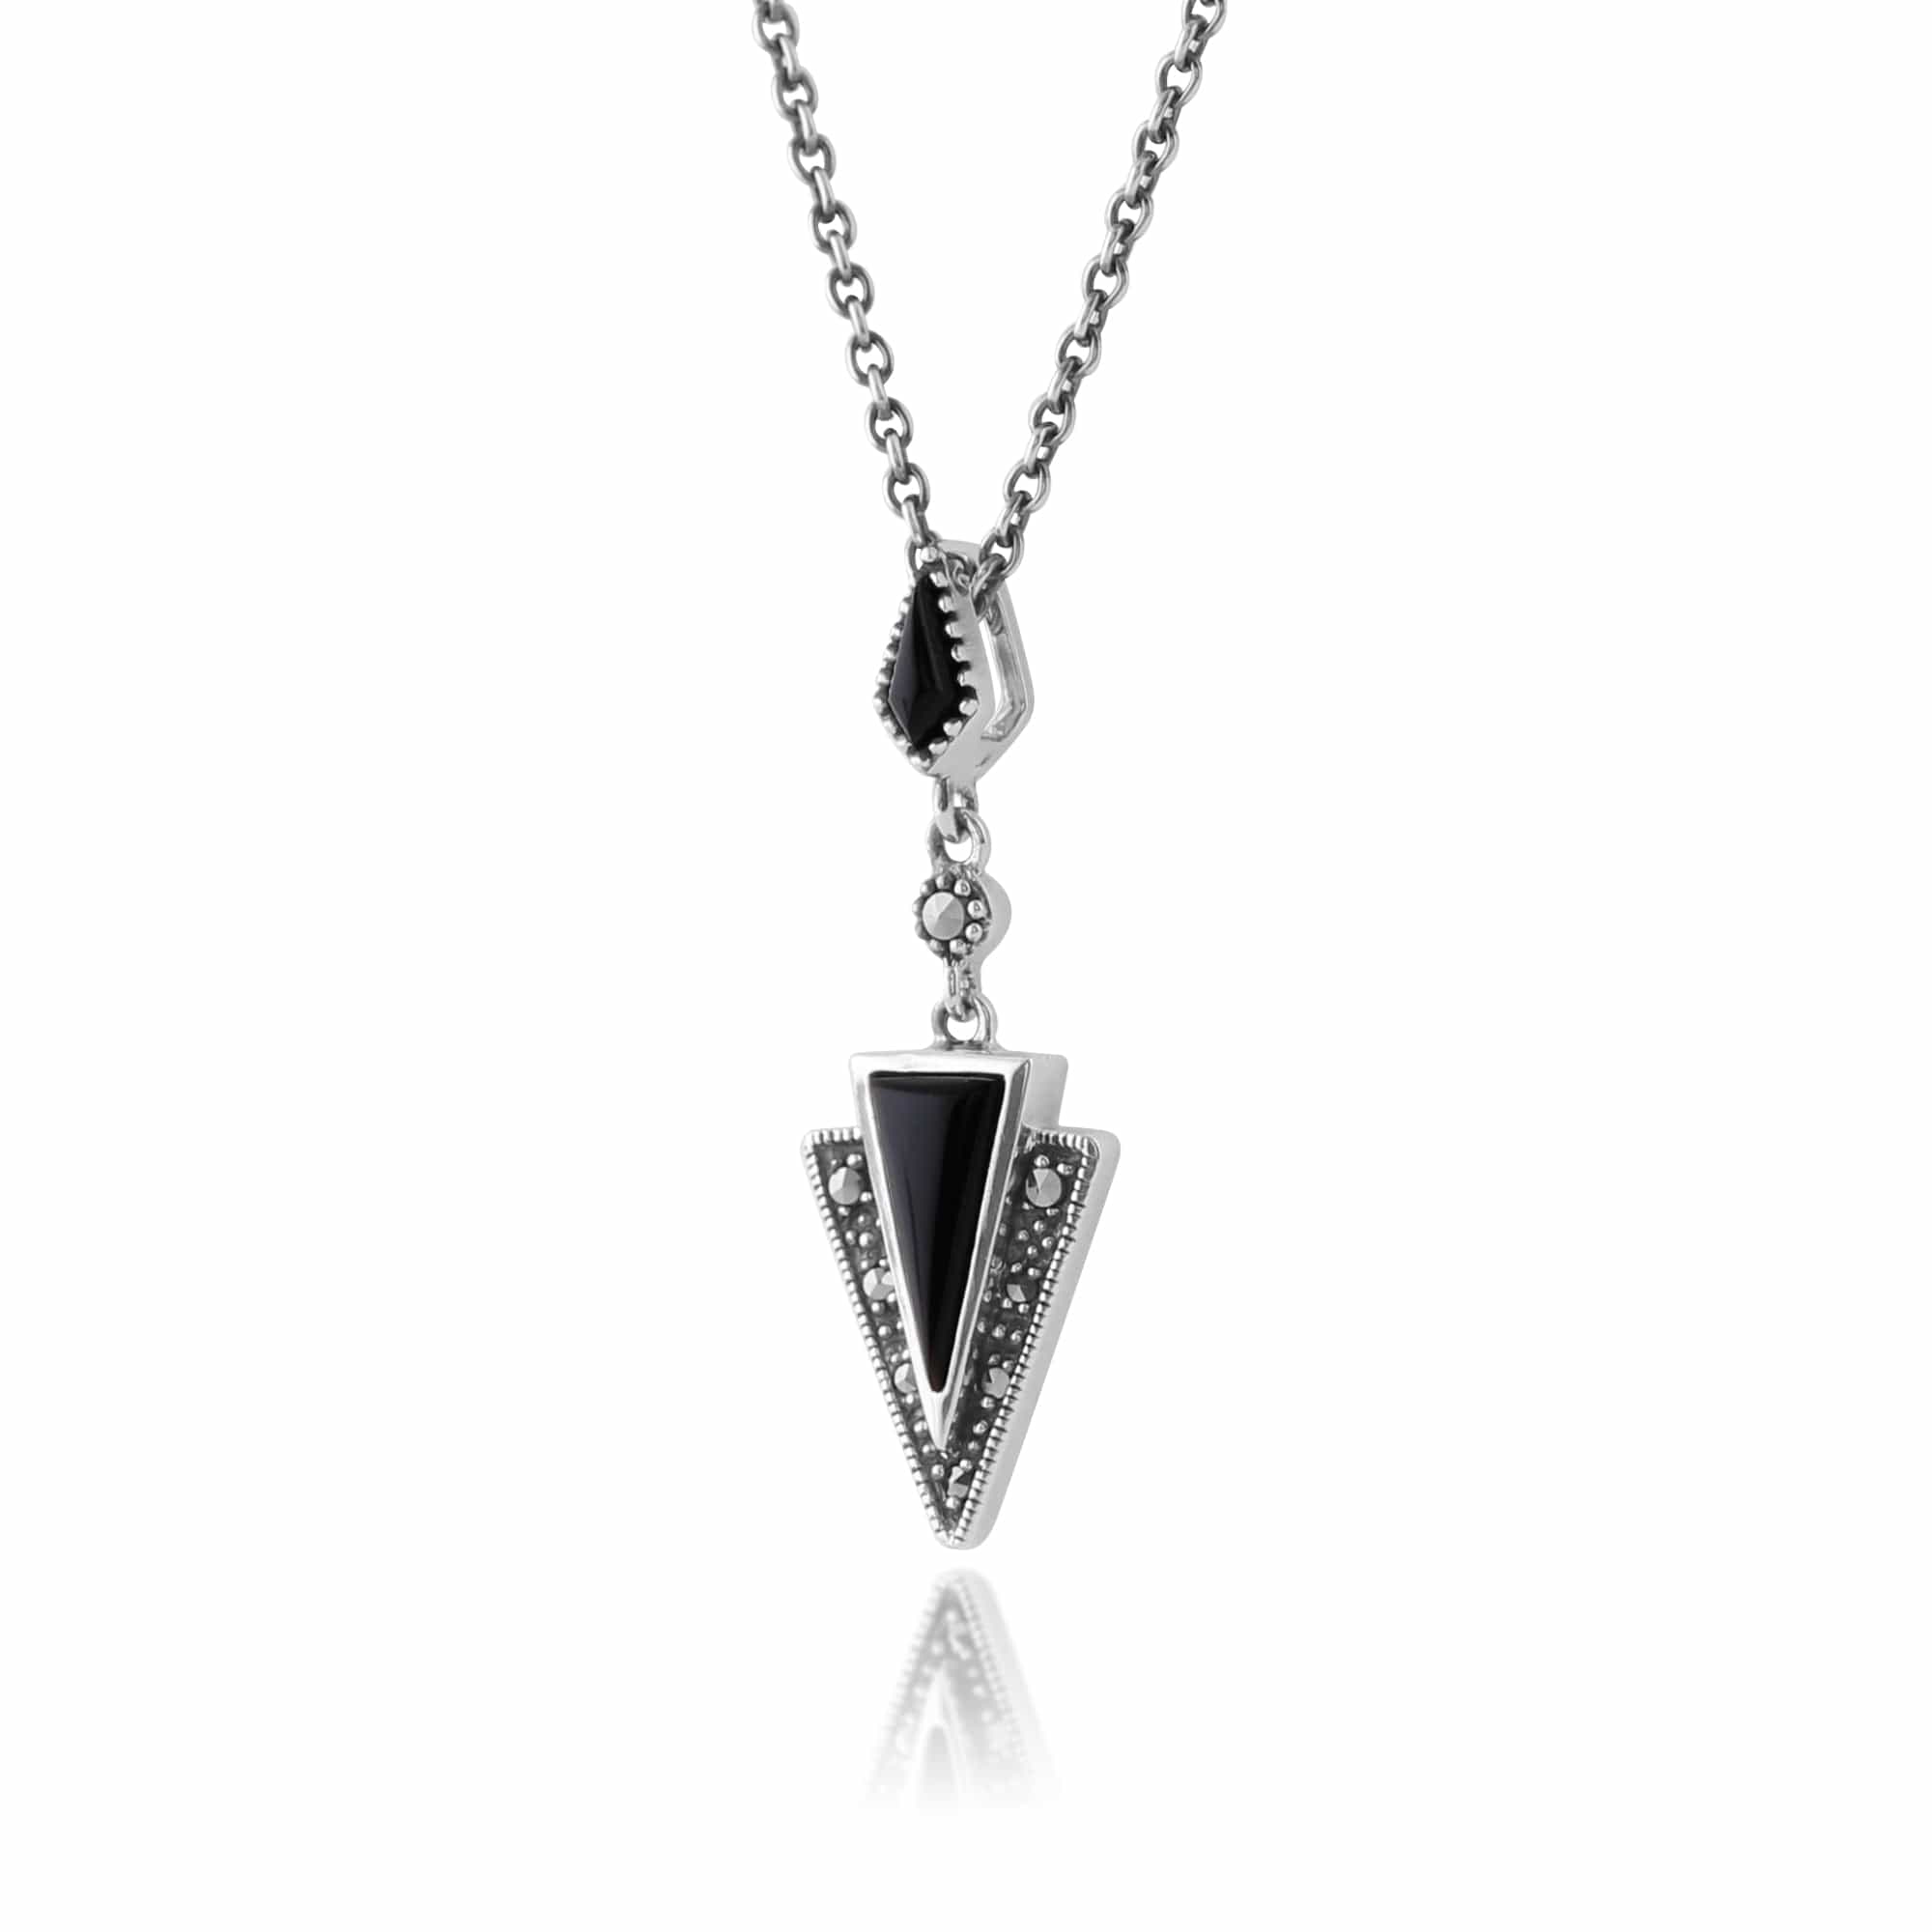 214E823004925-214N658304925 Art Deco Style Style Black Onyx & Marcasite Triangle Drop Earrings & Pendant Set in 925 Sterling Silver 5